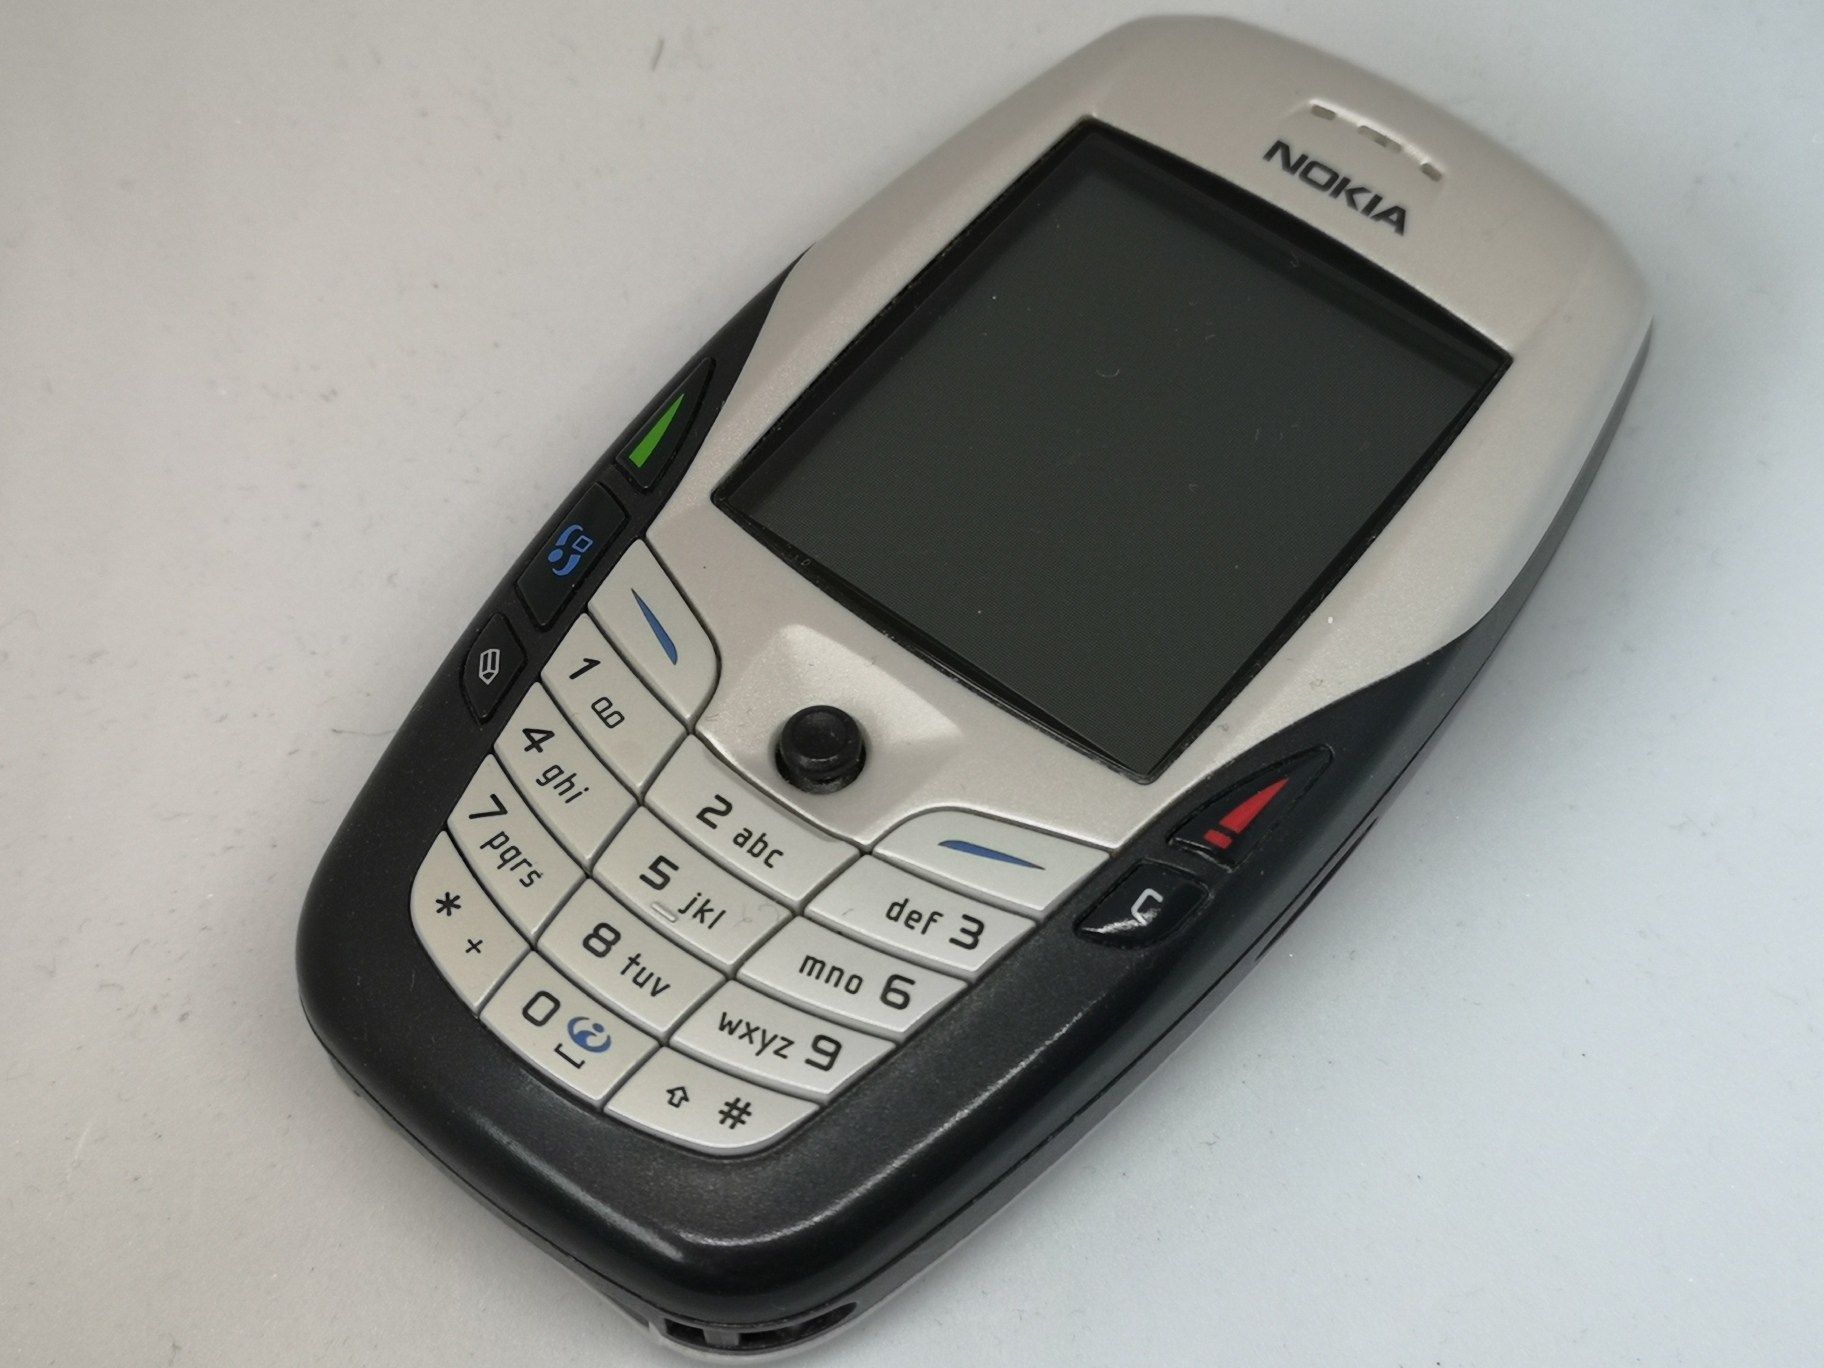 Harga dan Spesifikasi Nokia  6600  HP  Nokia  Symbian Jadul 